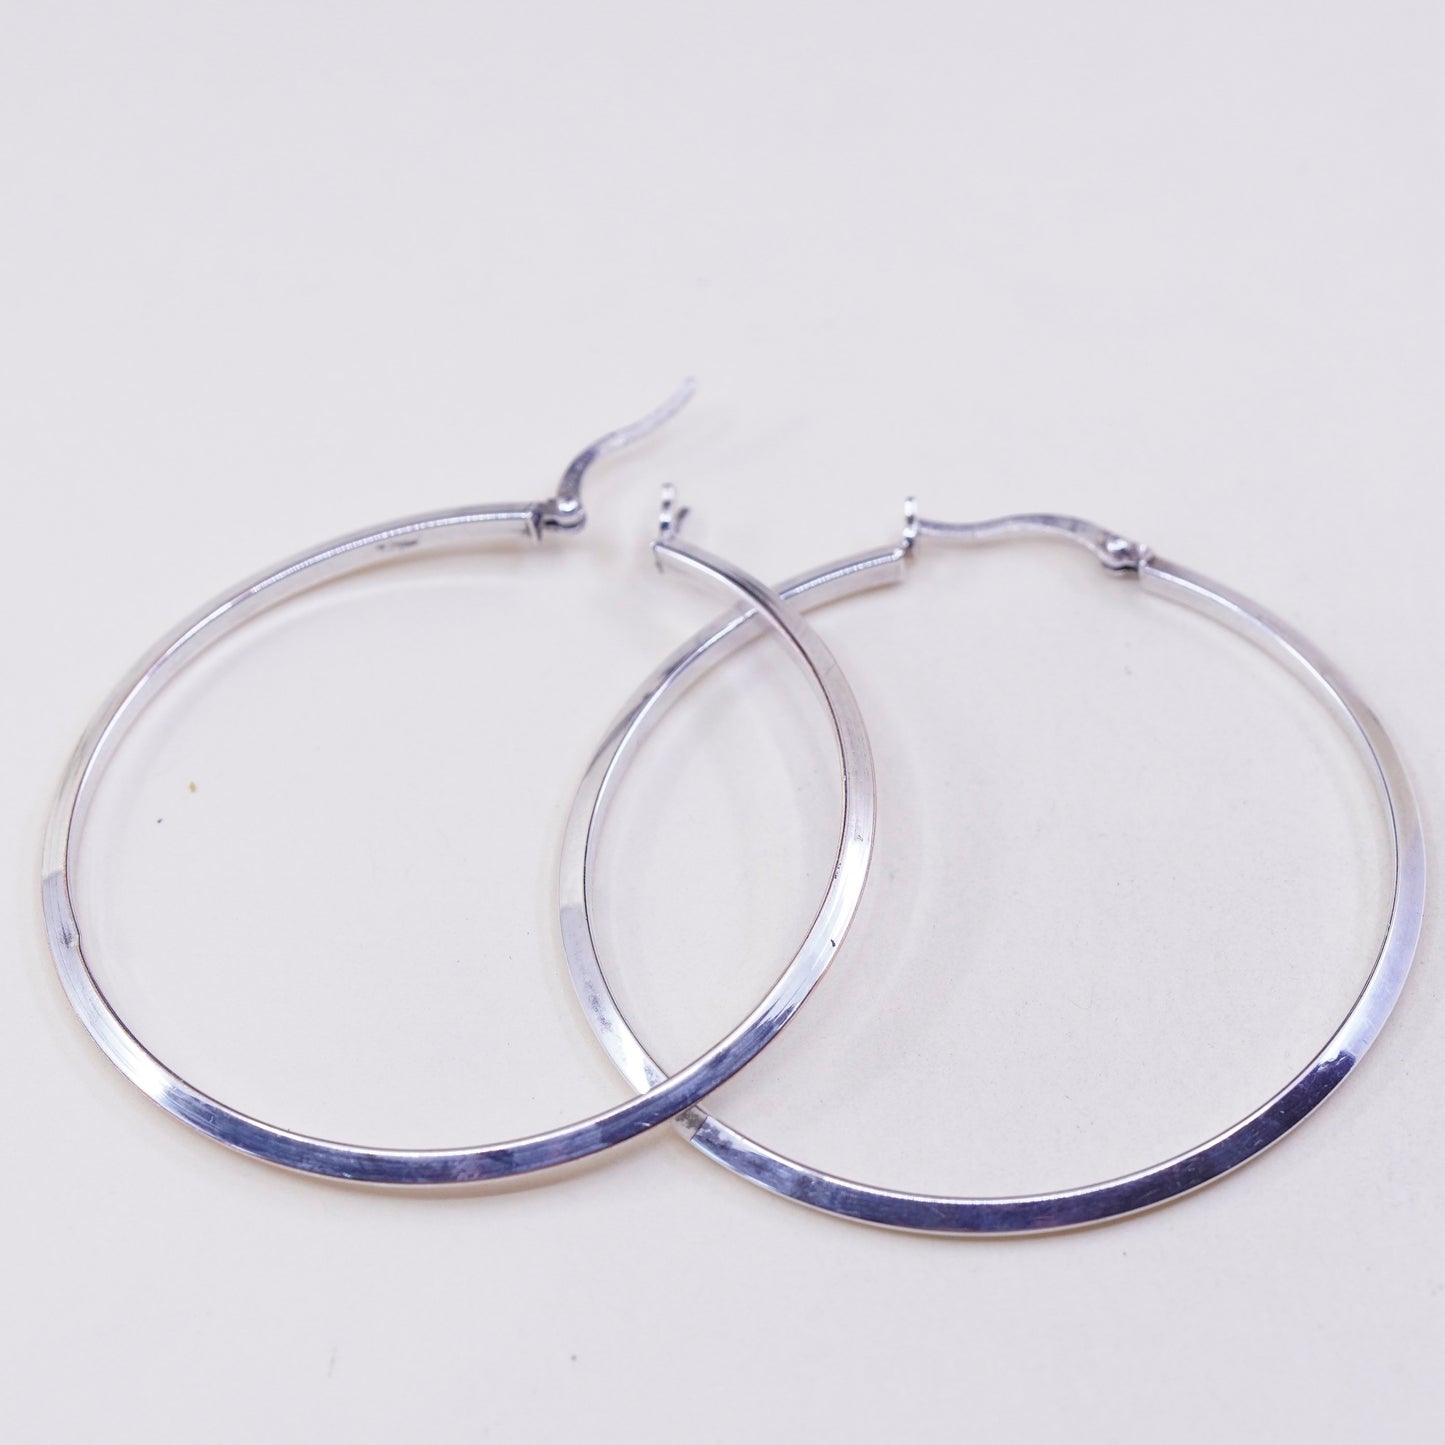 2” vtg JCM sterling silver loop earrings, fashion minimalist primitive hoops